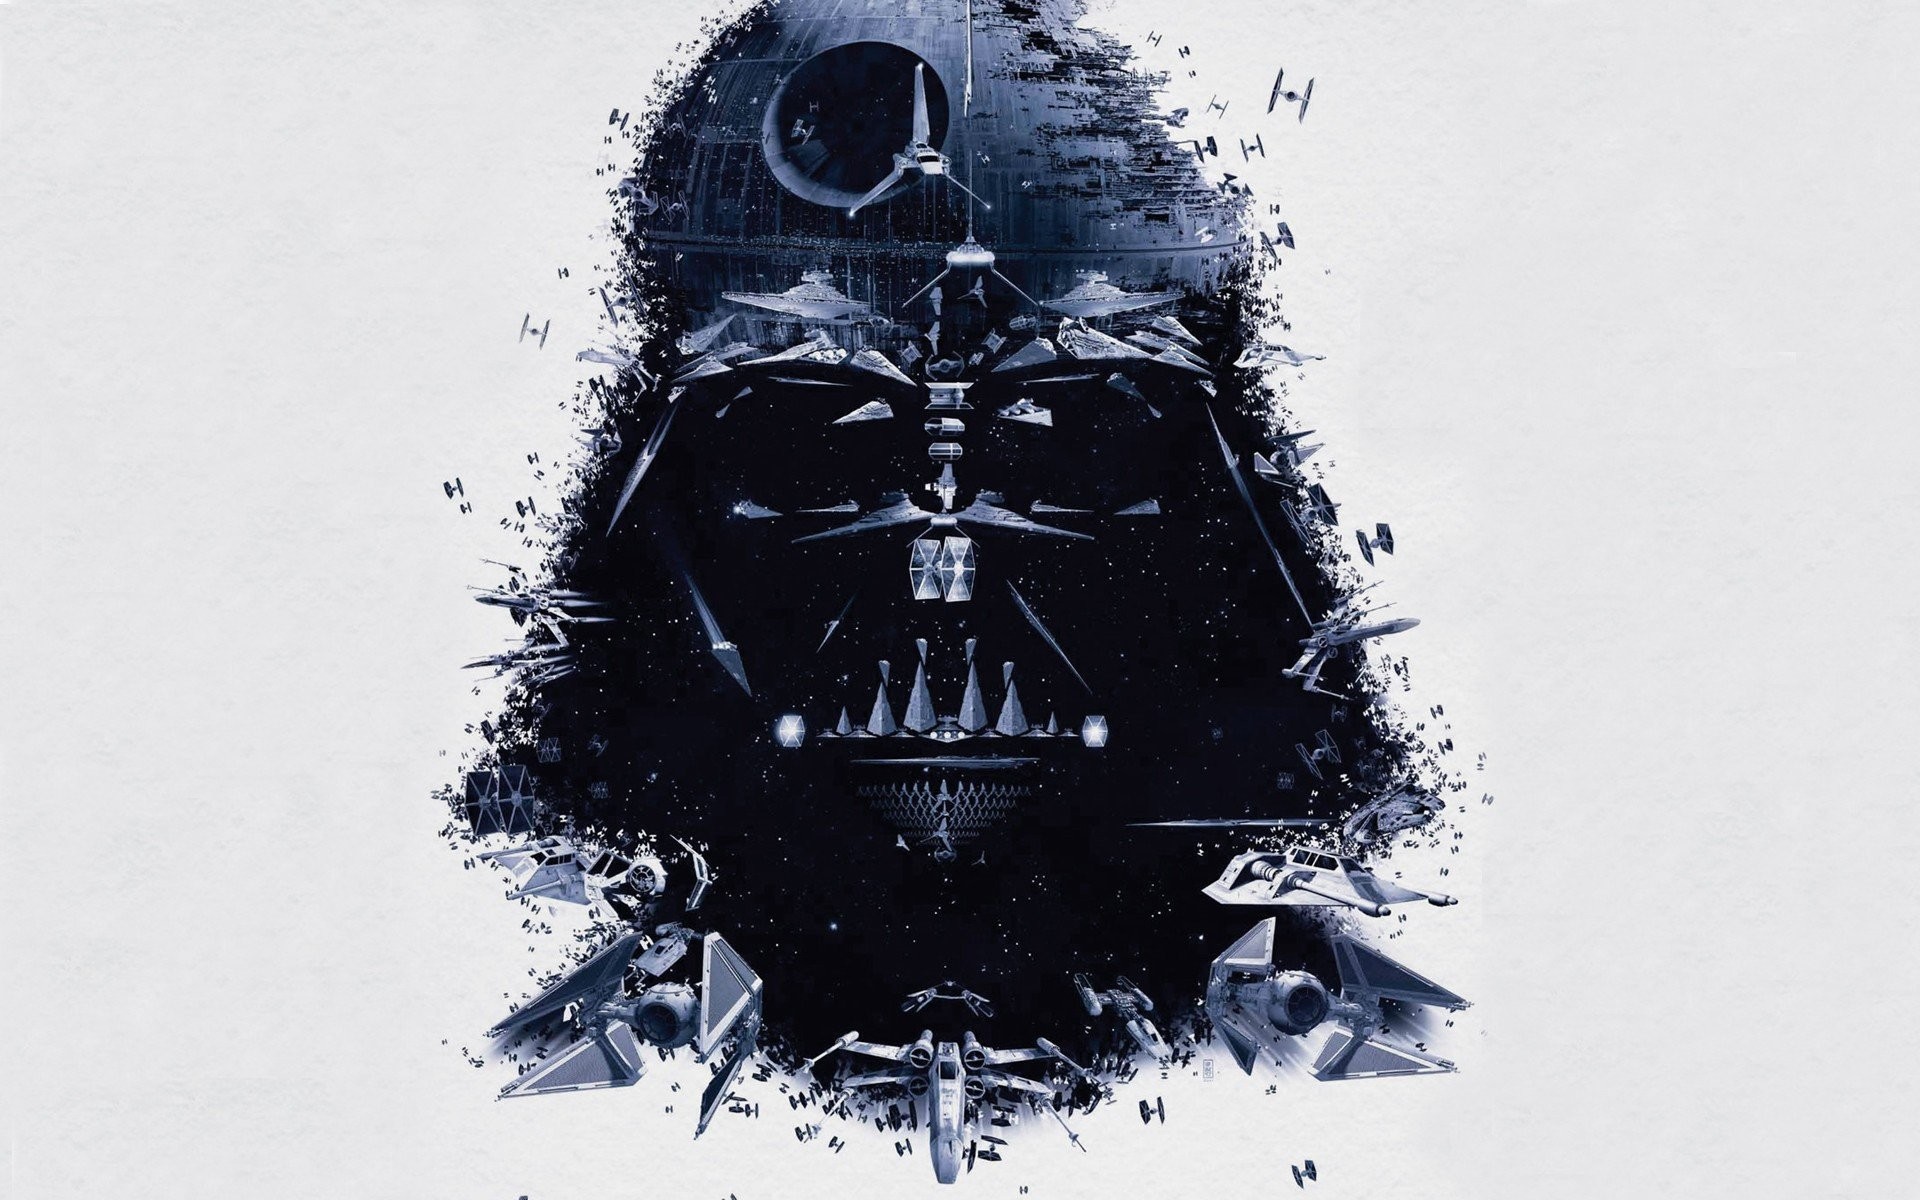 Artwork Dark Side Darth Vader Death Star Montreal Movies Outer Space Spaceships Wars Vehicles